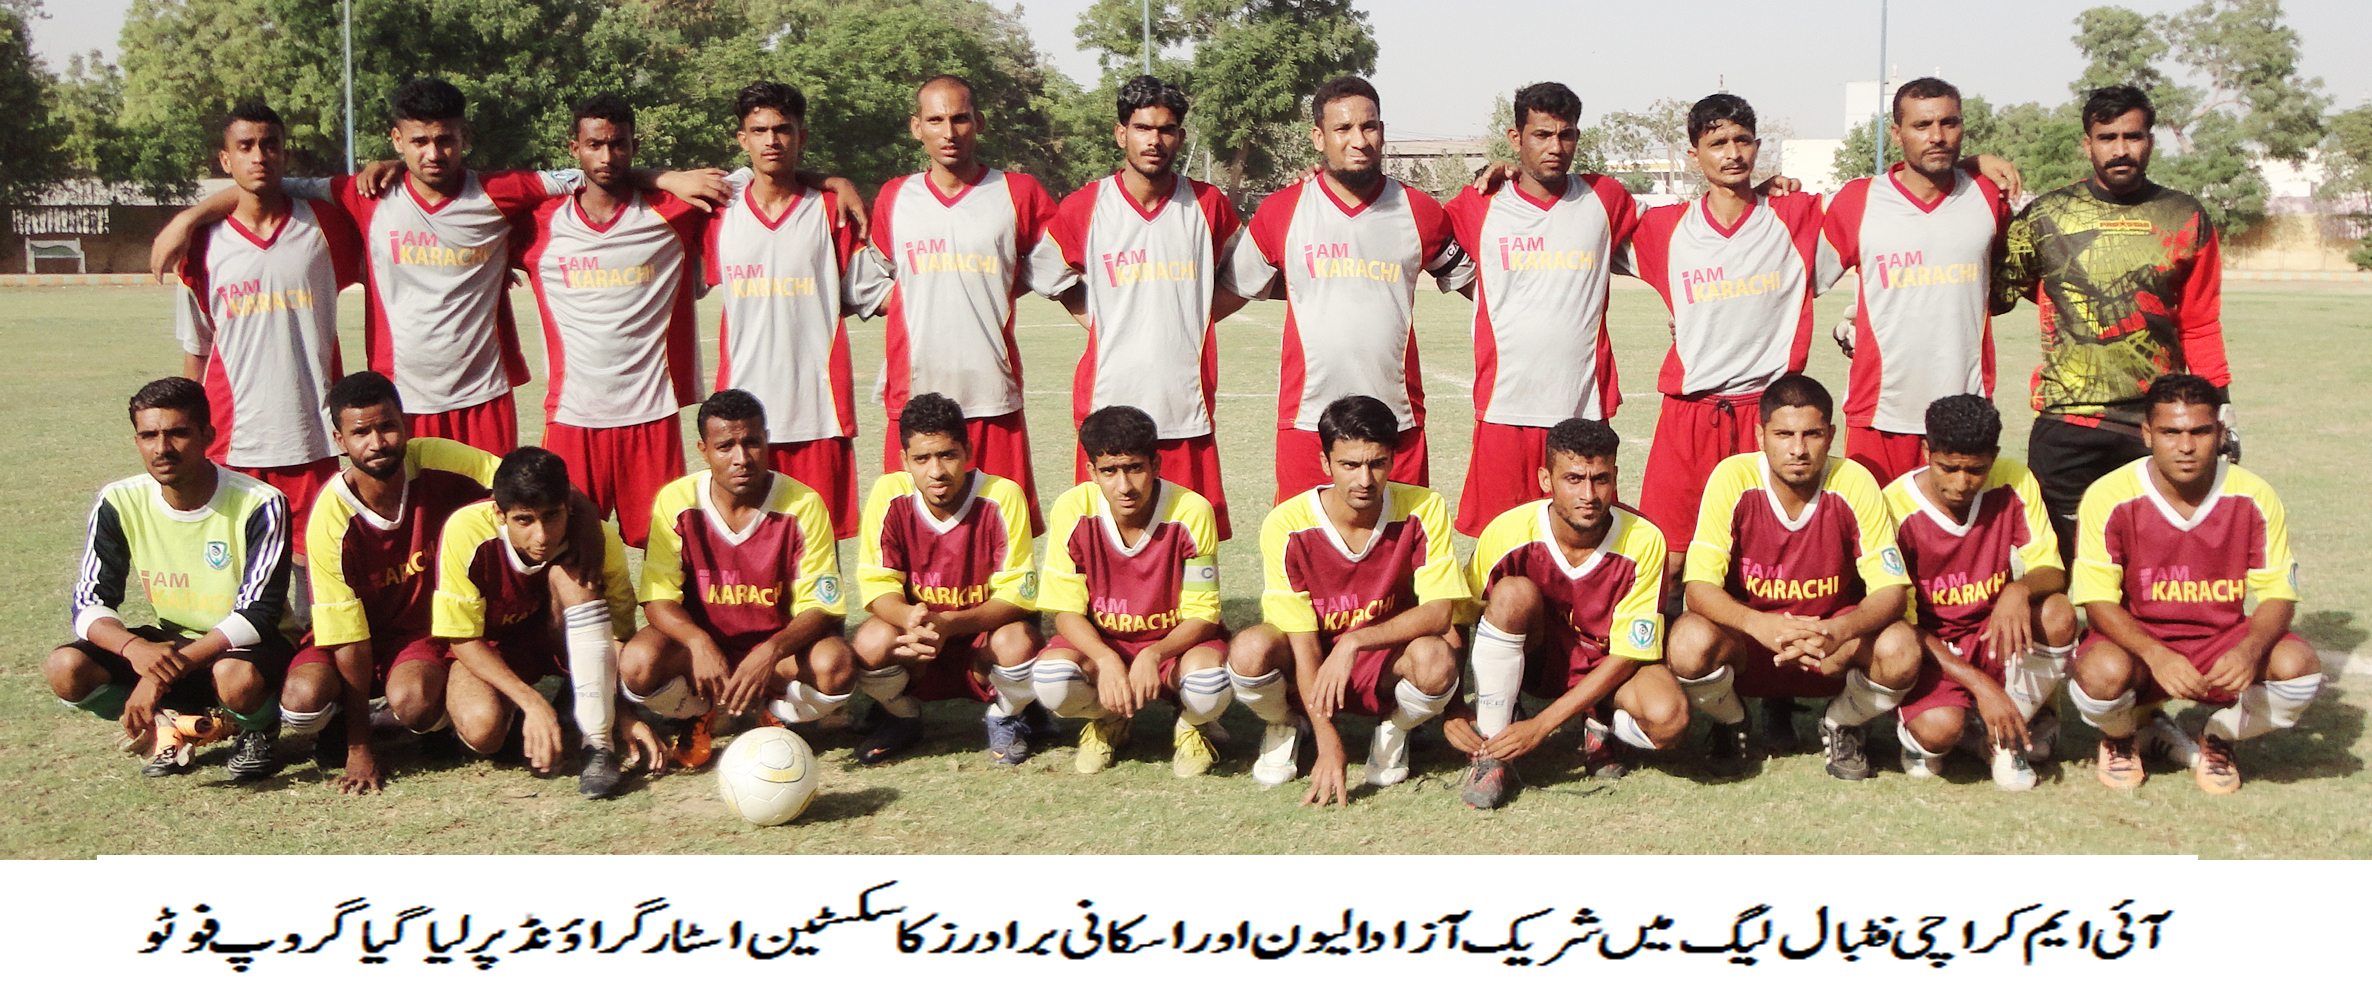 Askani Brothers and Azam Sports wins